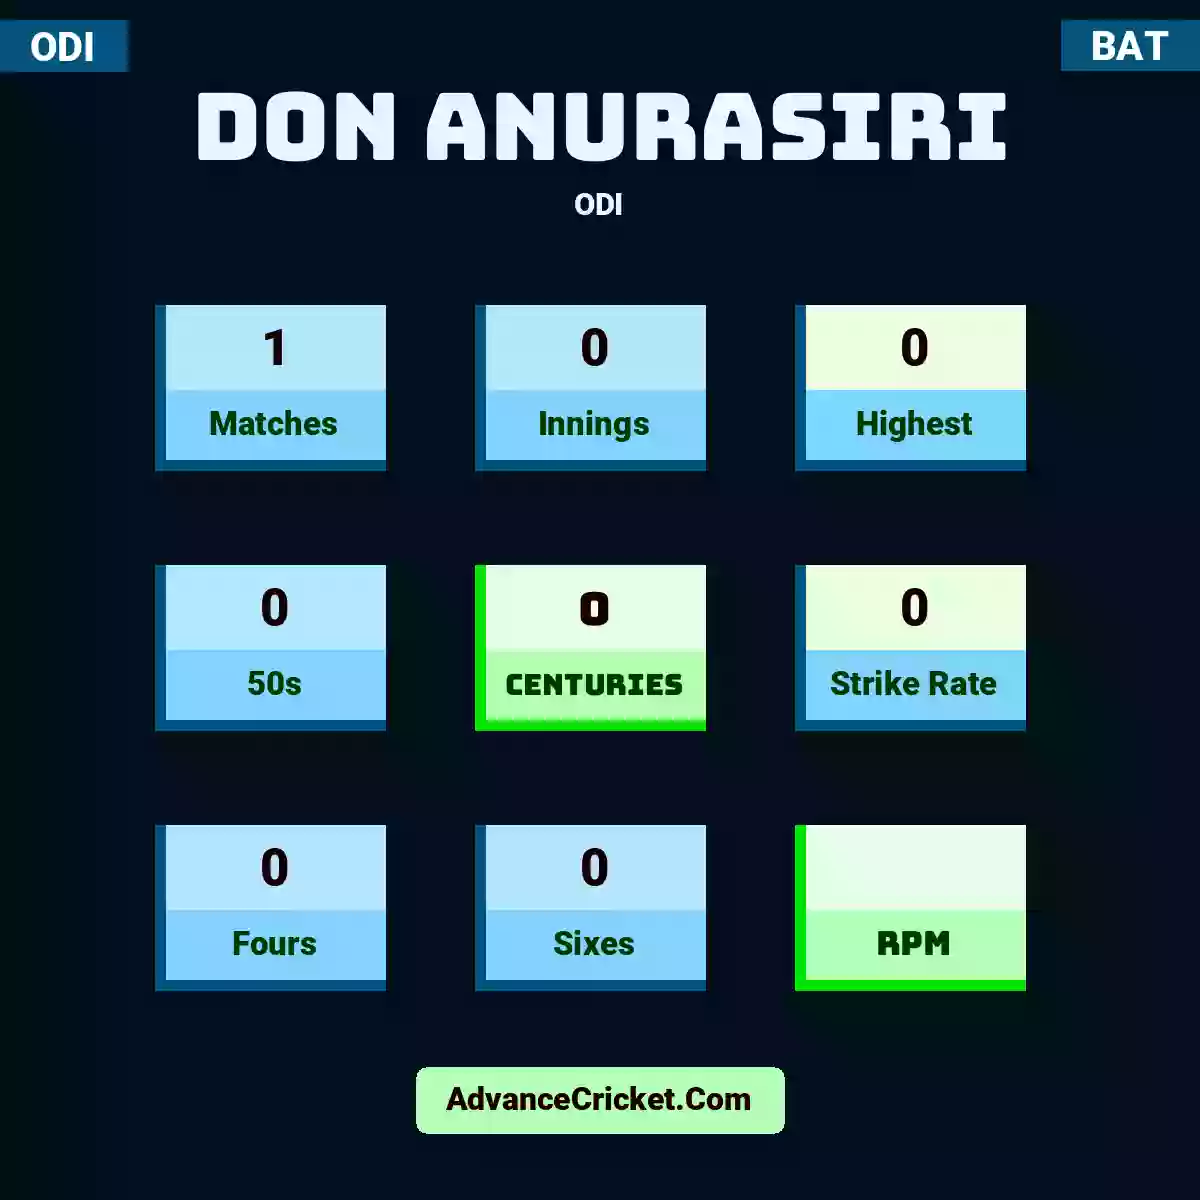 Don Anurasiri ODI , Don Anurasiri played 1 matches, scored 0 runs as highest, 0 half-centuries, and 0 centuries, with a strike rate of 0. D.Anurasiri hit 0 fours and 0 sixes.